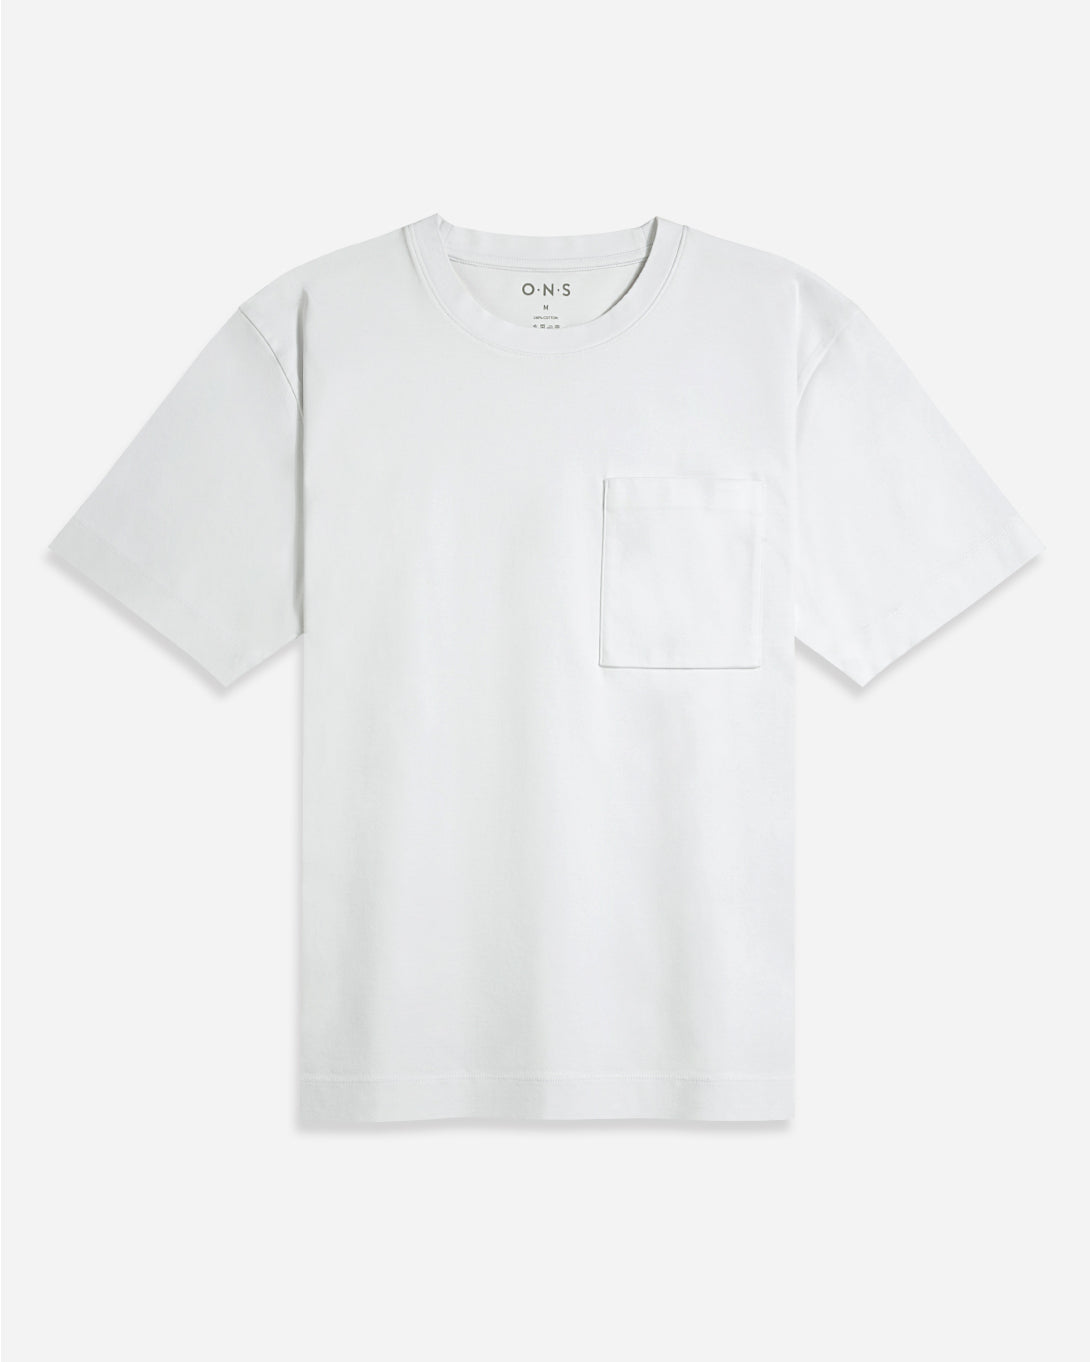 BRIGHT WHITE Baseile Pocket Tee Mens Stretch Breathable Pocket Shirt